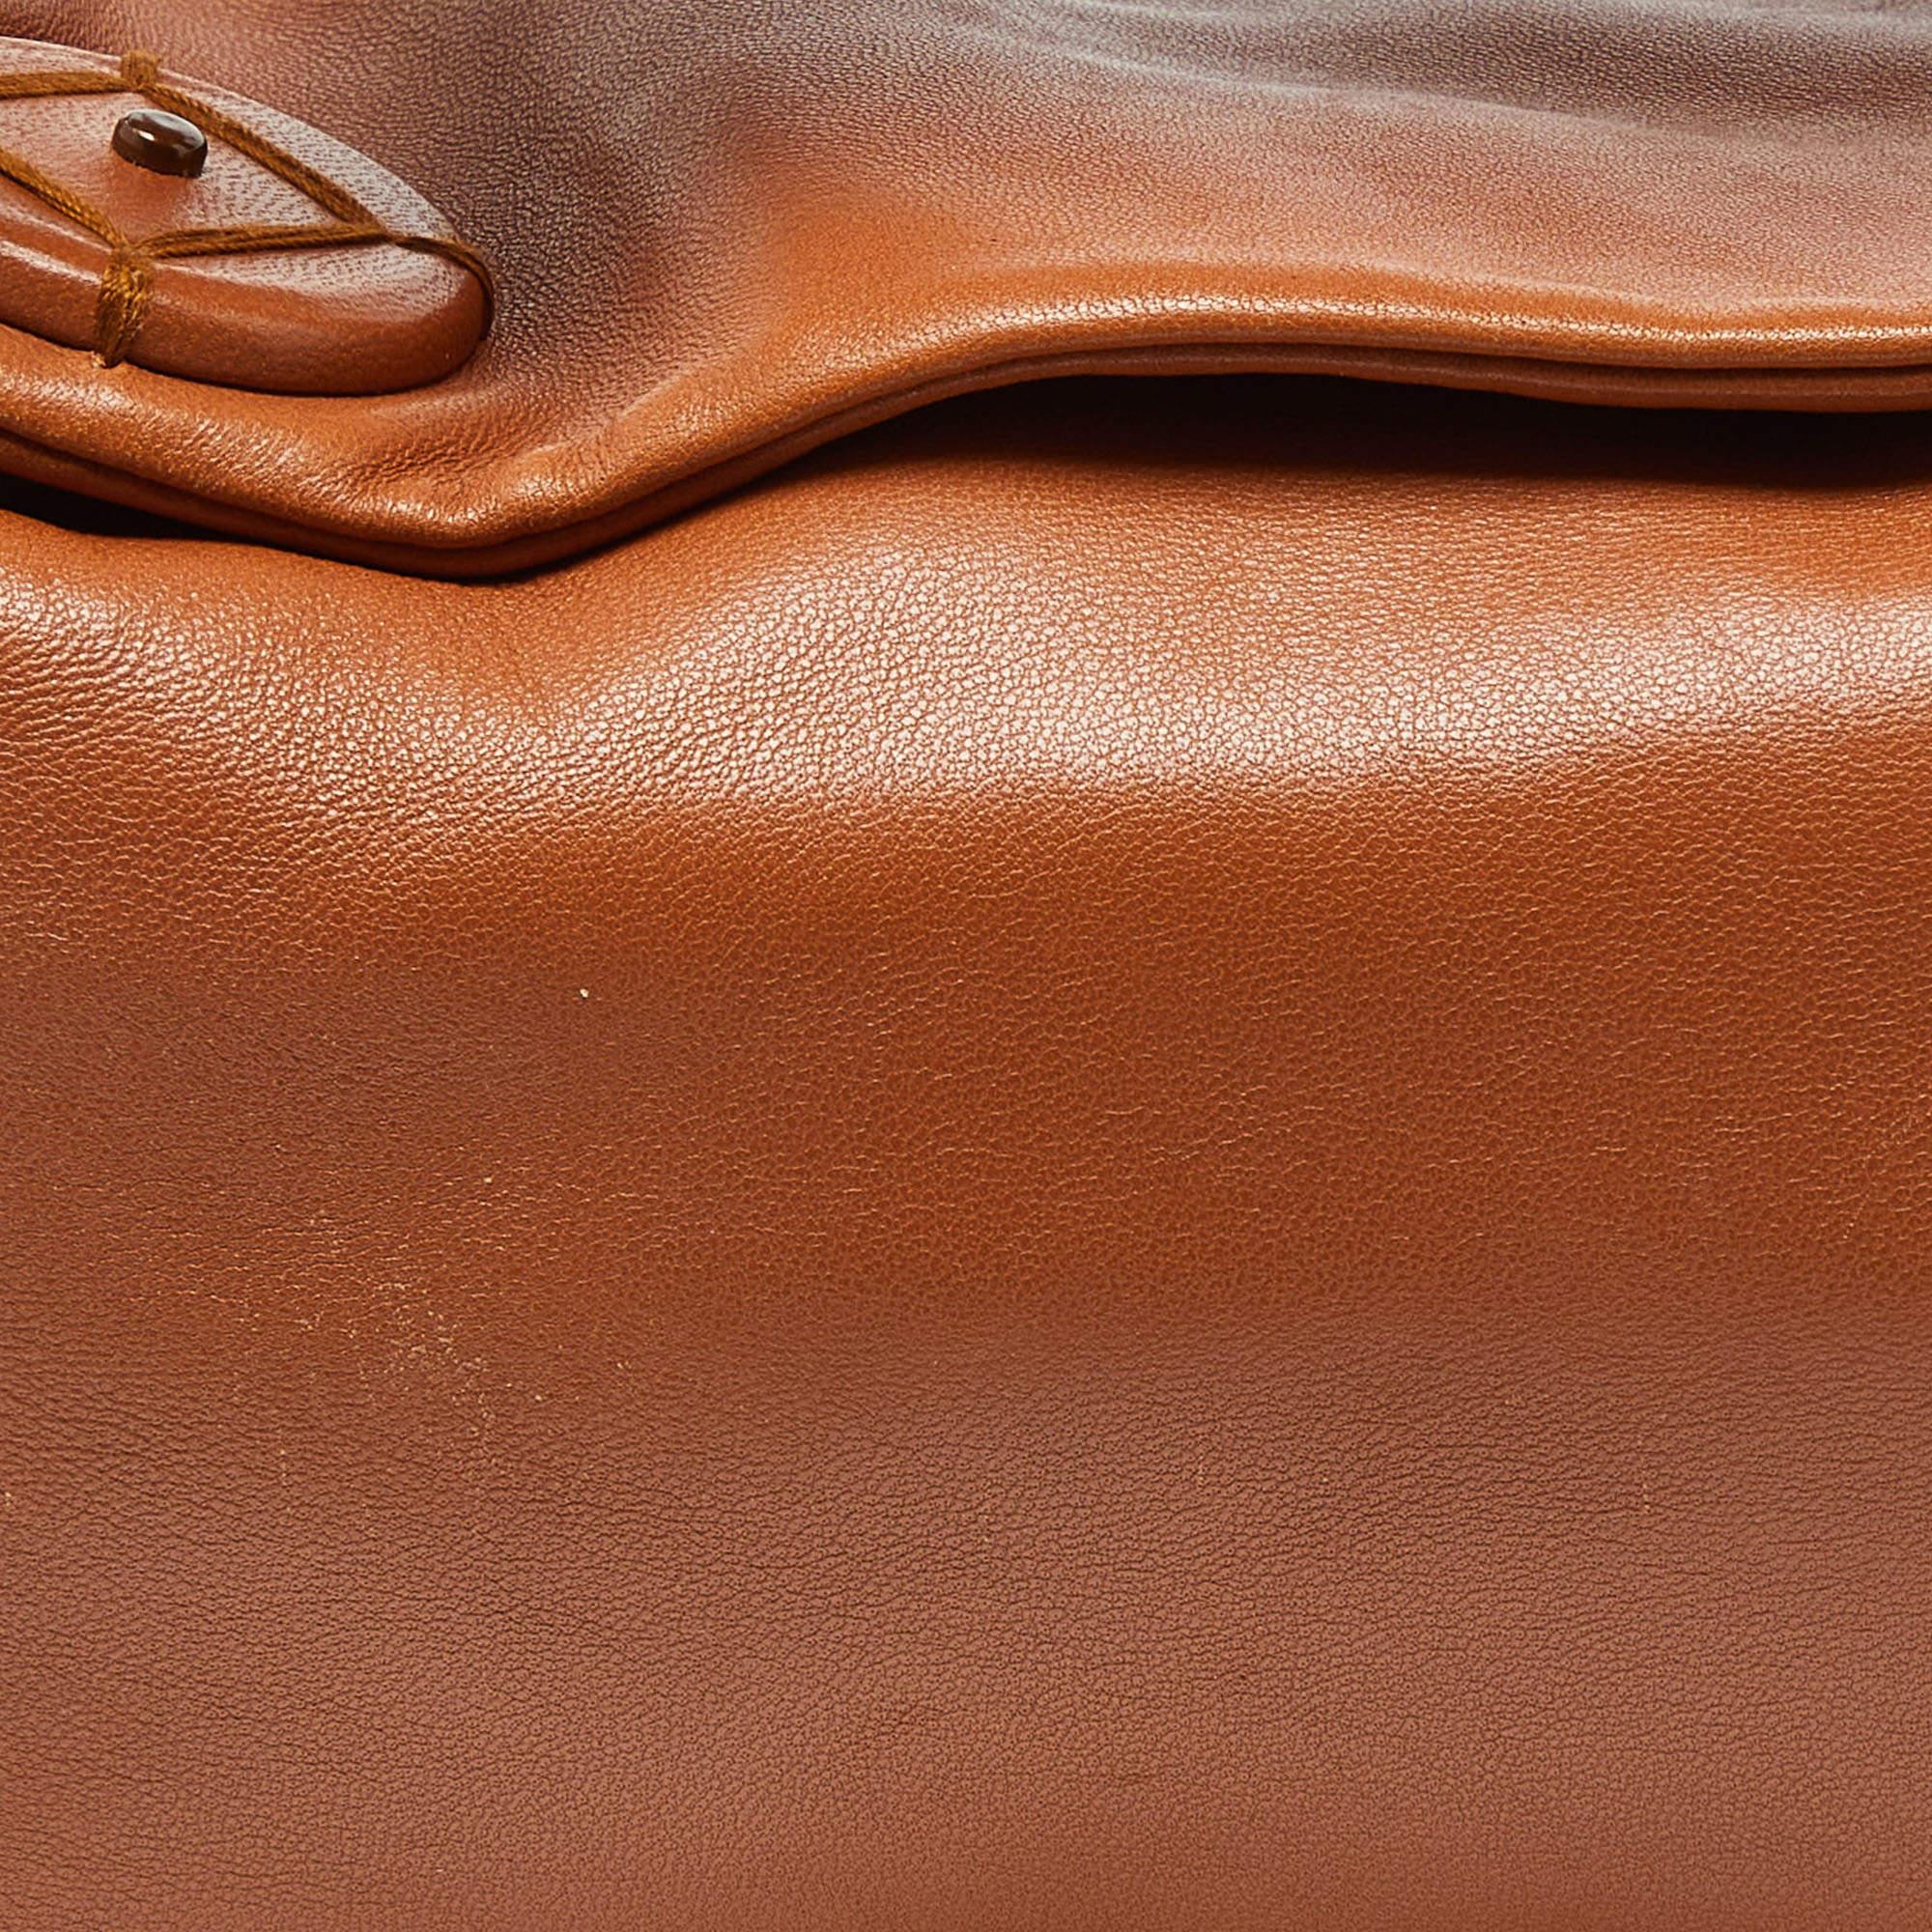 Prada Tan/Orange Leather Satchel For Sale 6